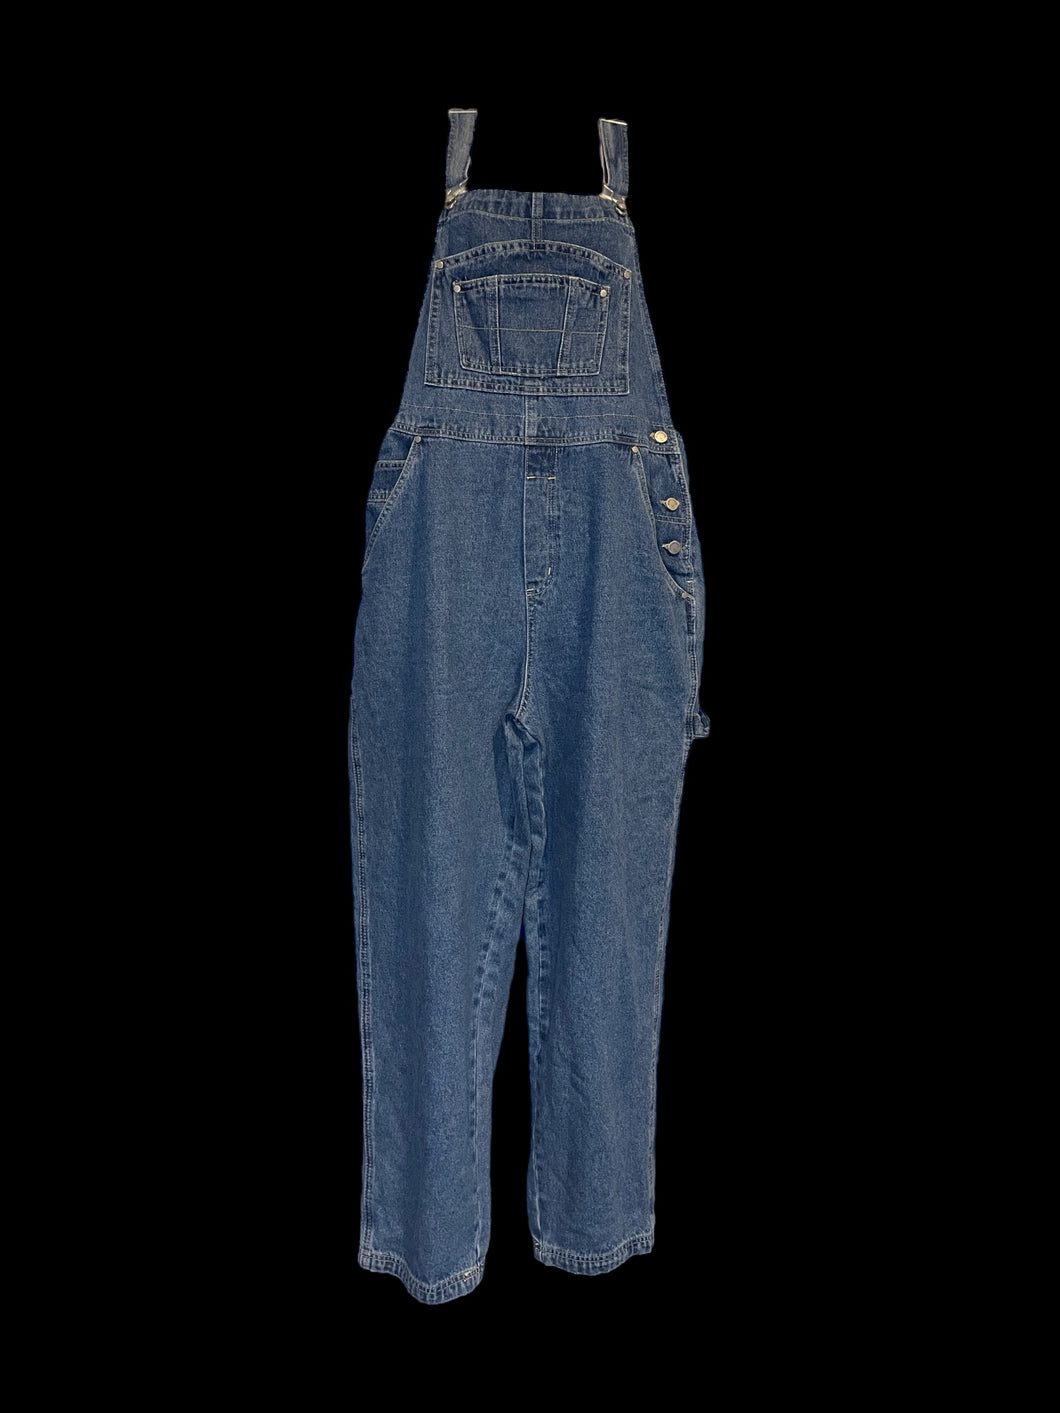 1X Blue denim straight leg overalls w/ pockets, side button closure, & adjustable straps